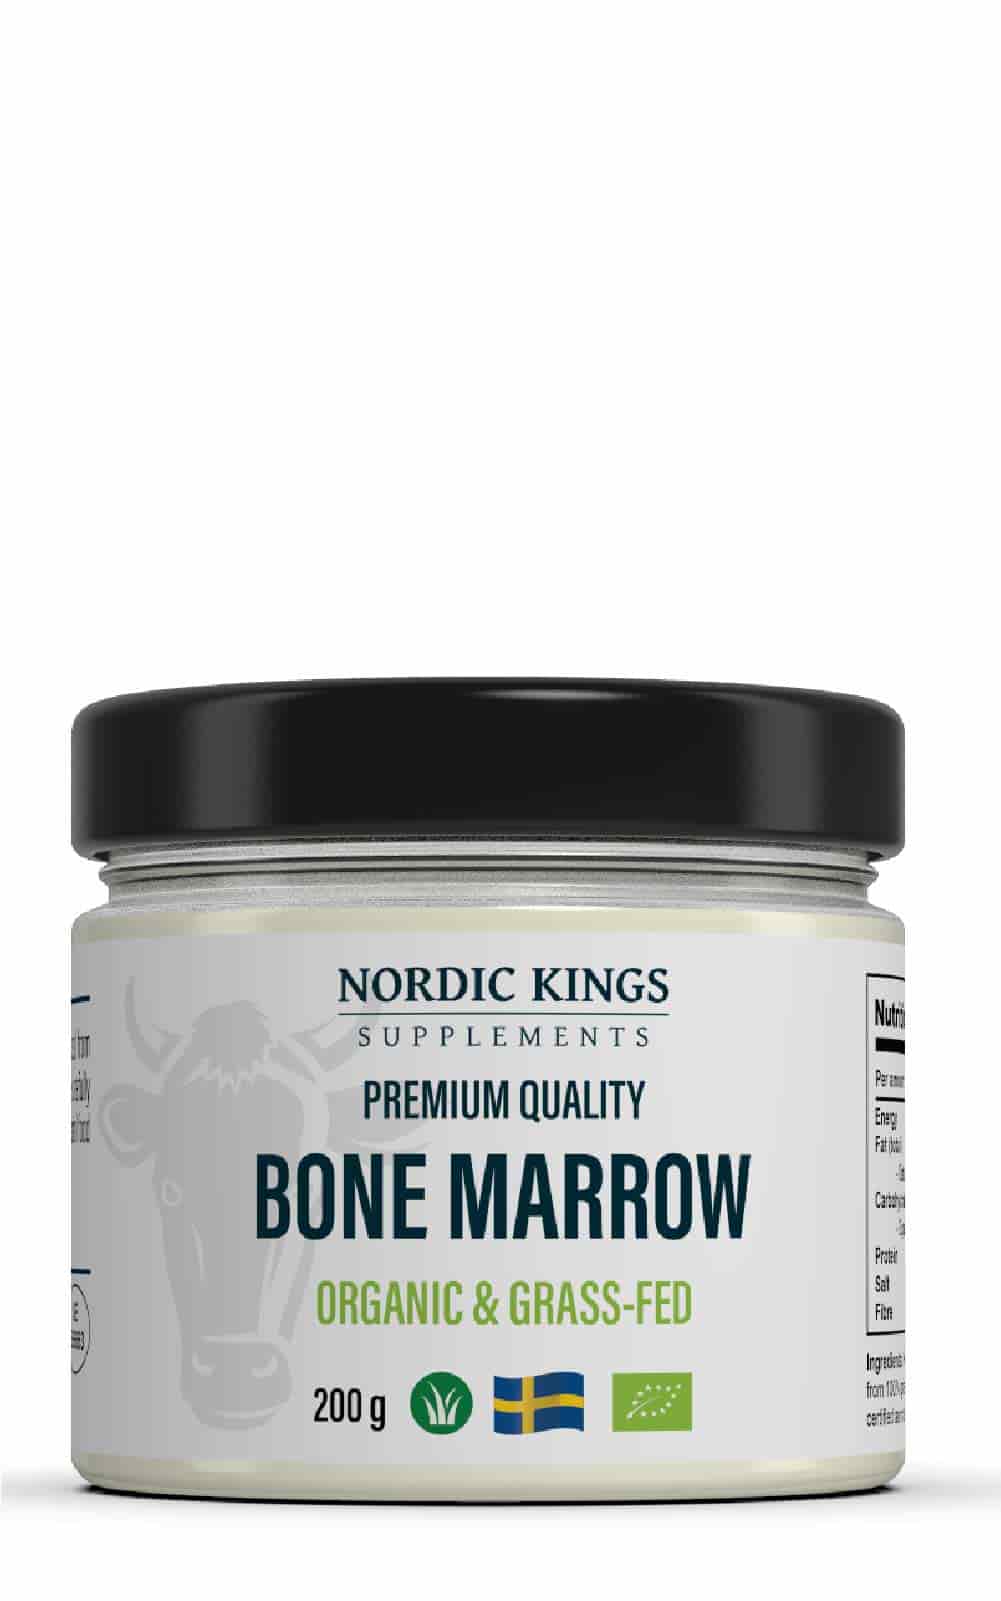 Nordic Kings Organic Beef Bone Marrow Fat bei LiveHelfi kaufen